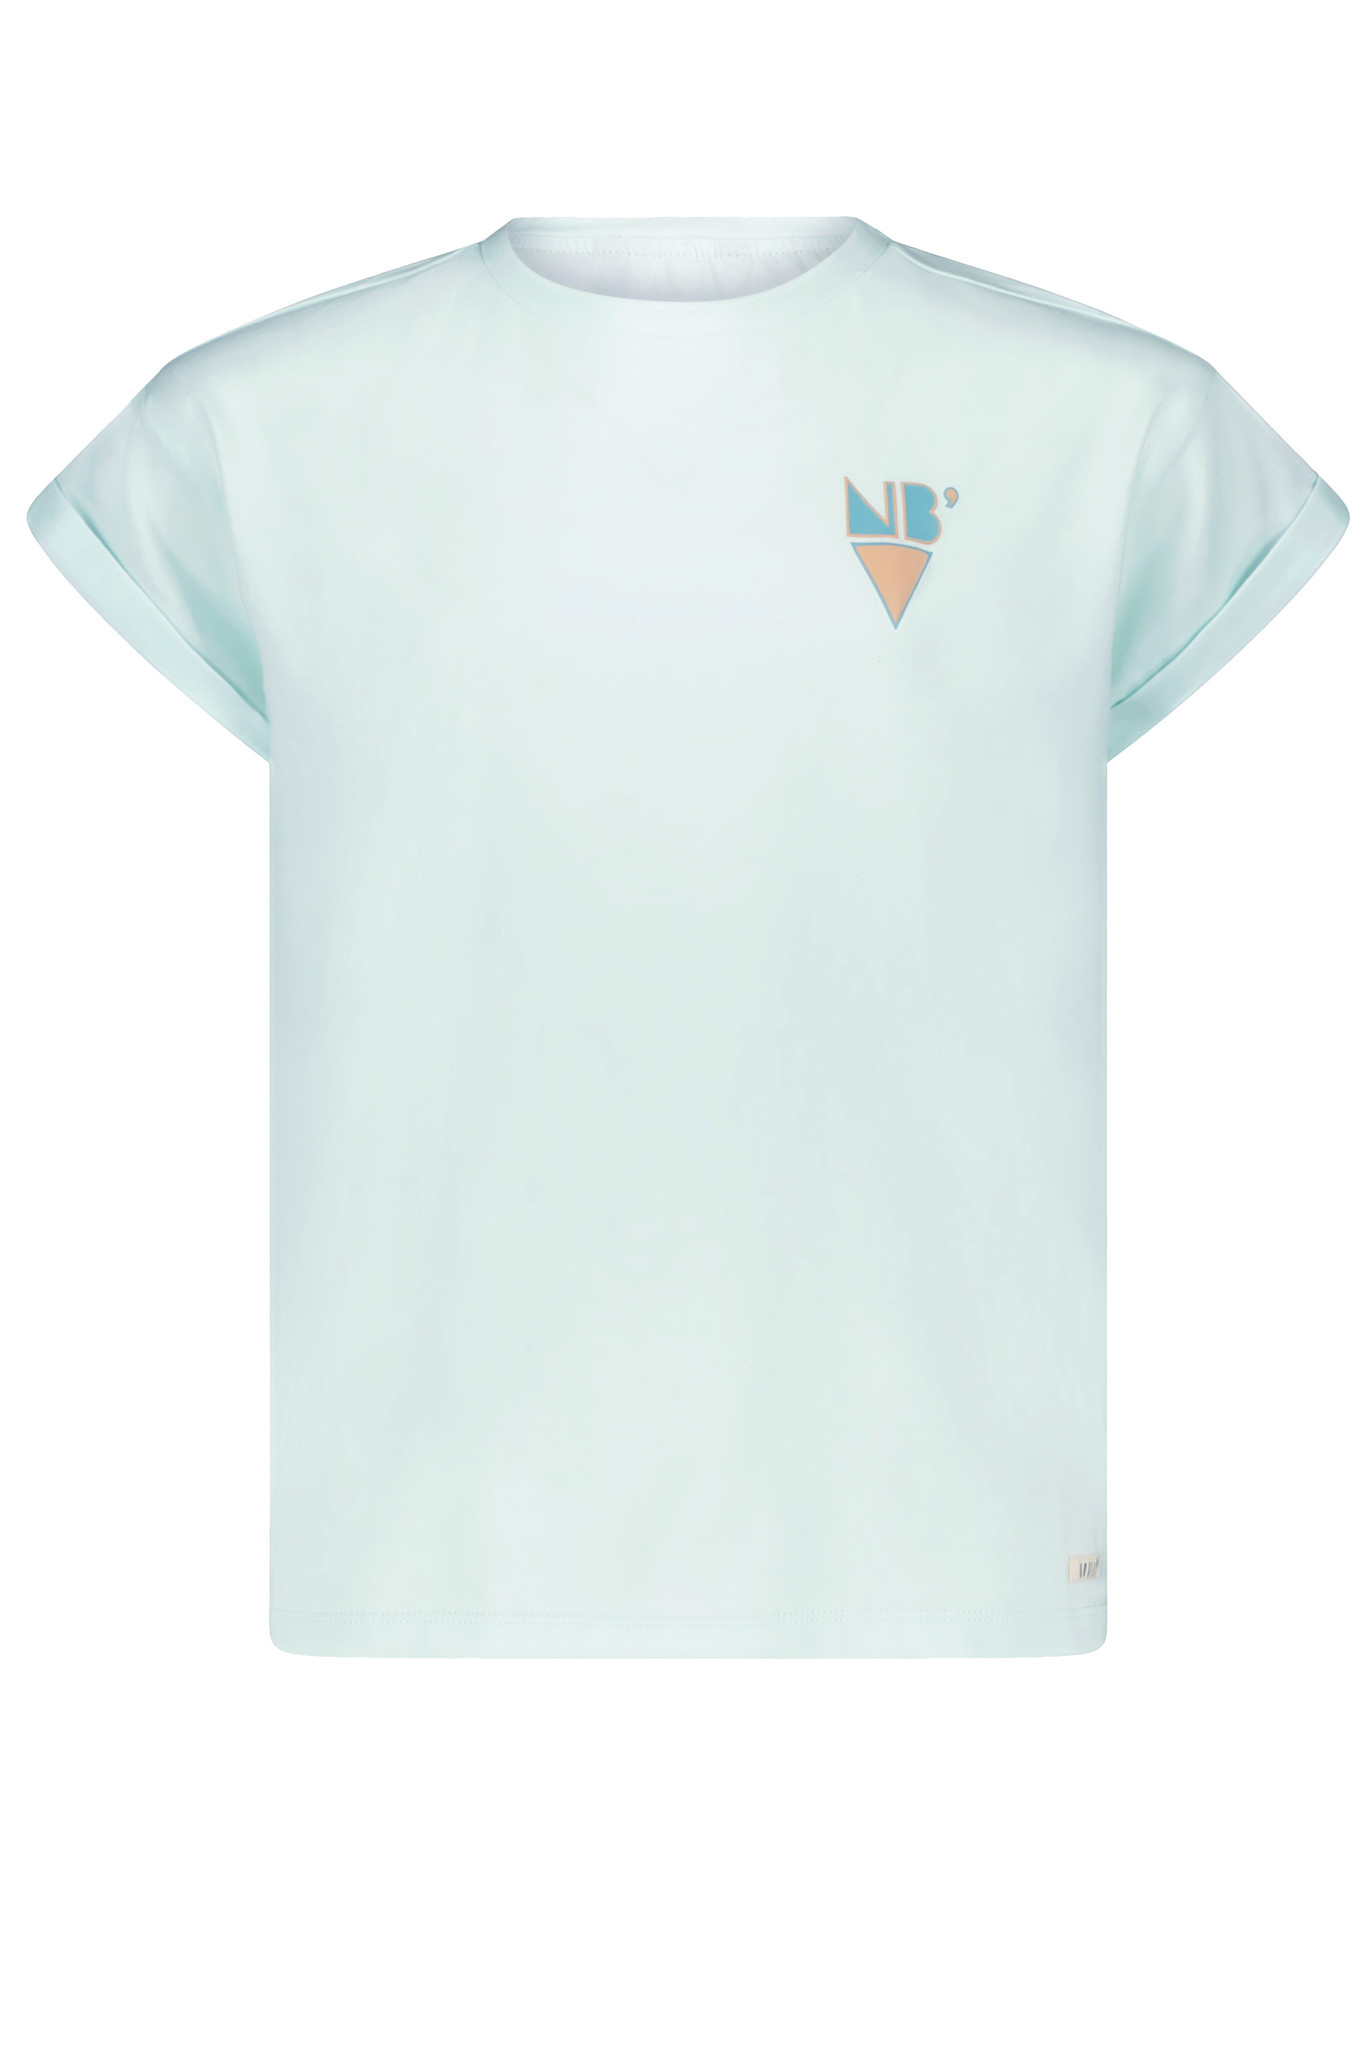 NoBell Meisjes t-shirt - Kasis - Spa blauw